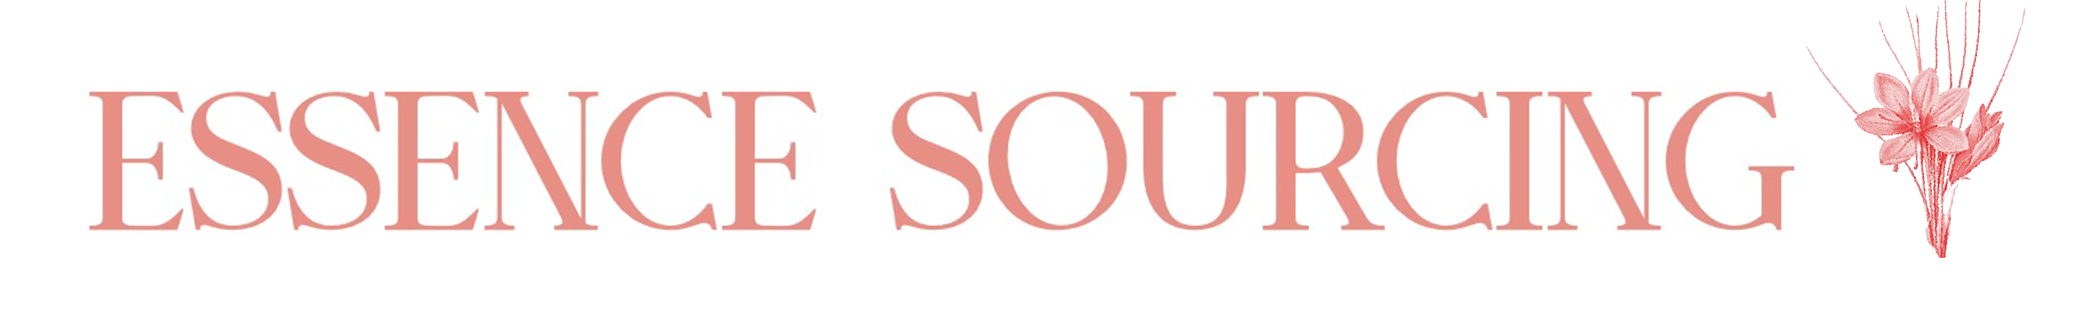 Essence Sourcing Logo Name